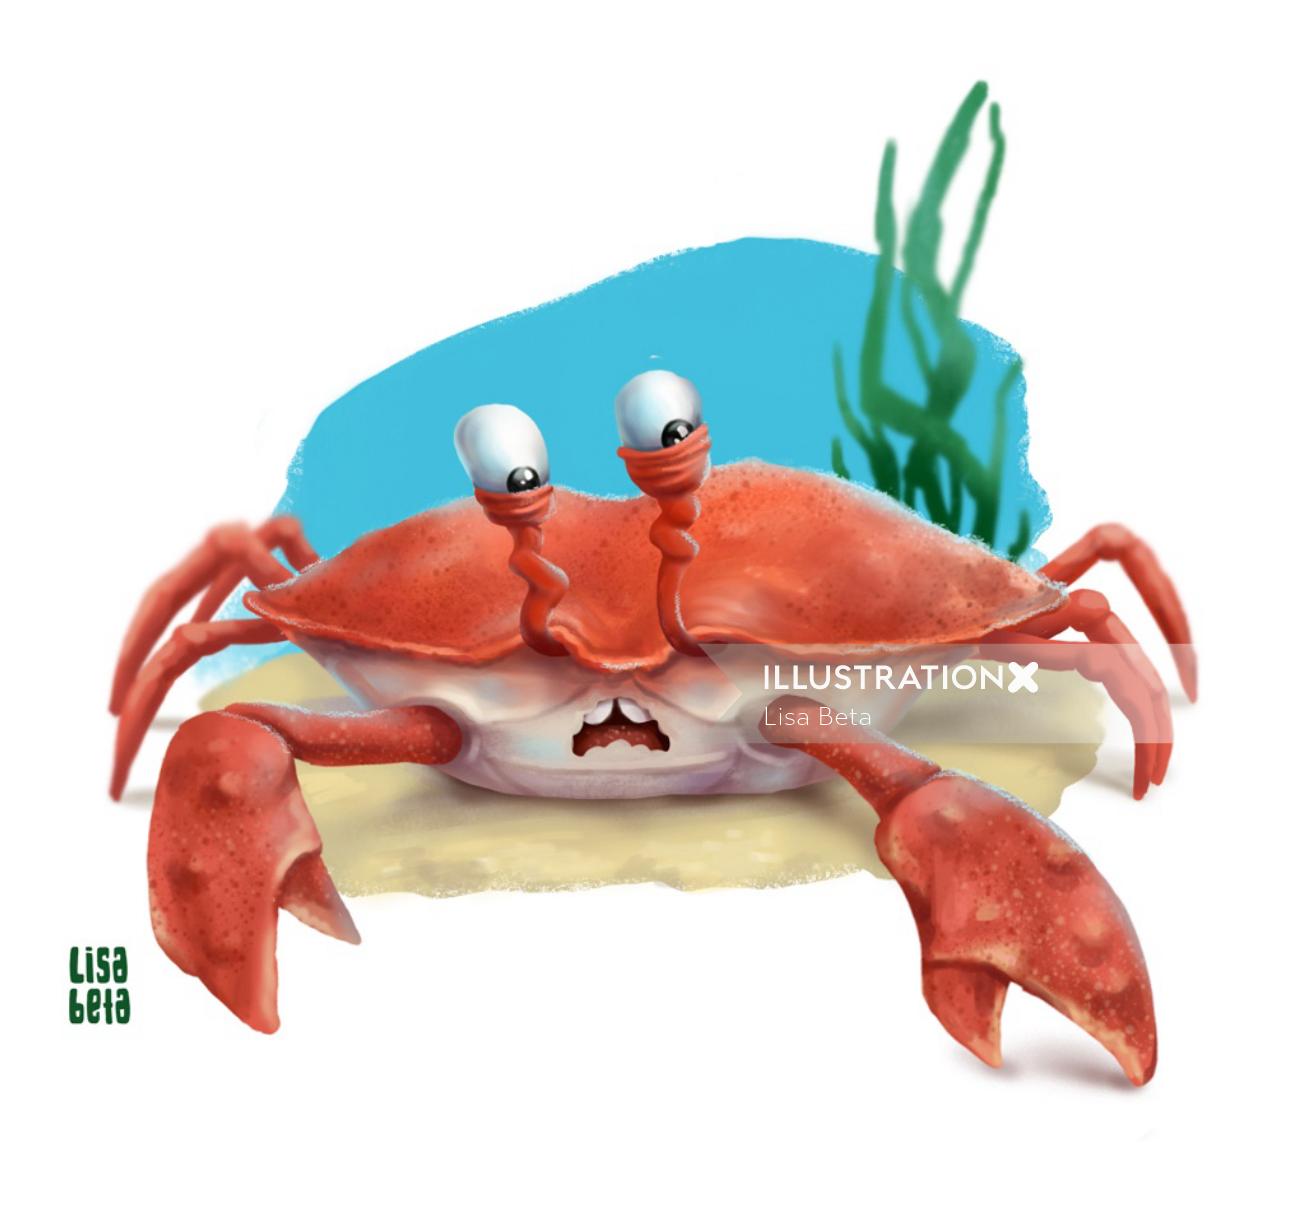 Cartoon crab illustration by Lisa Beta